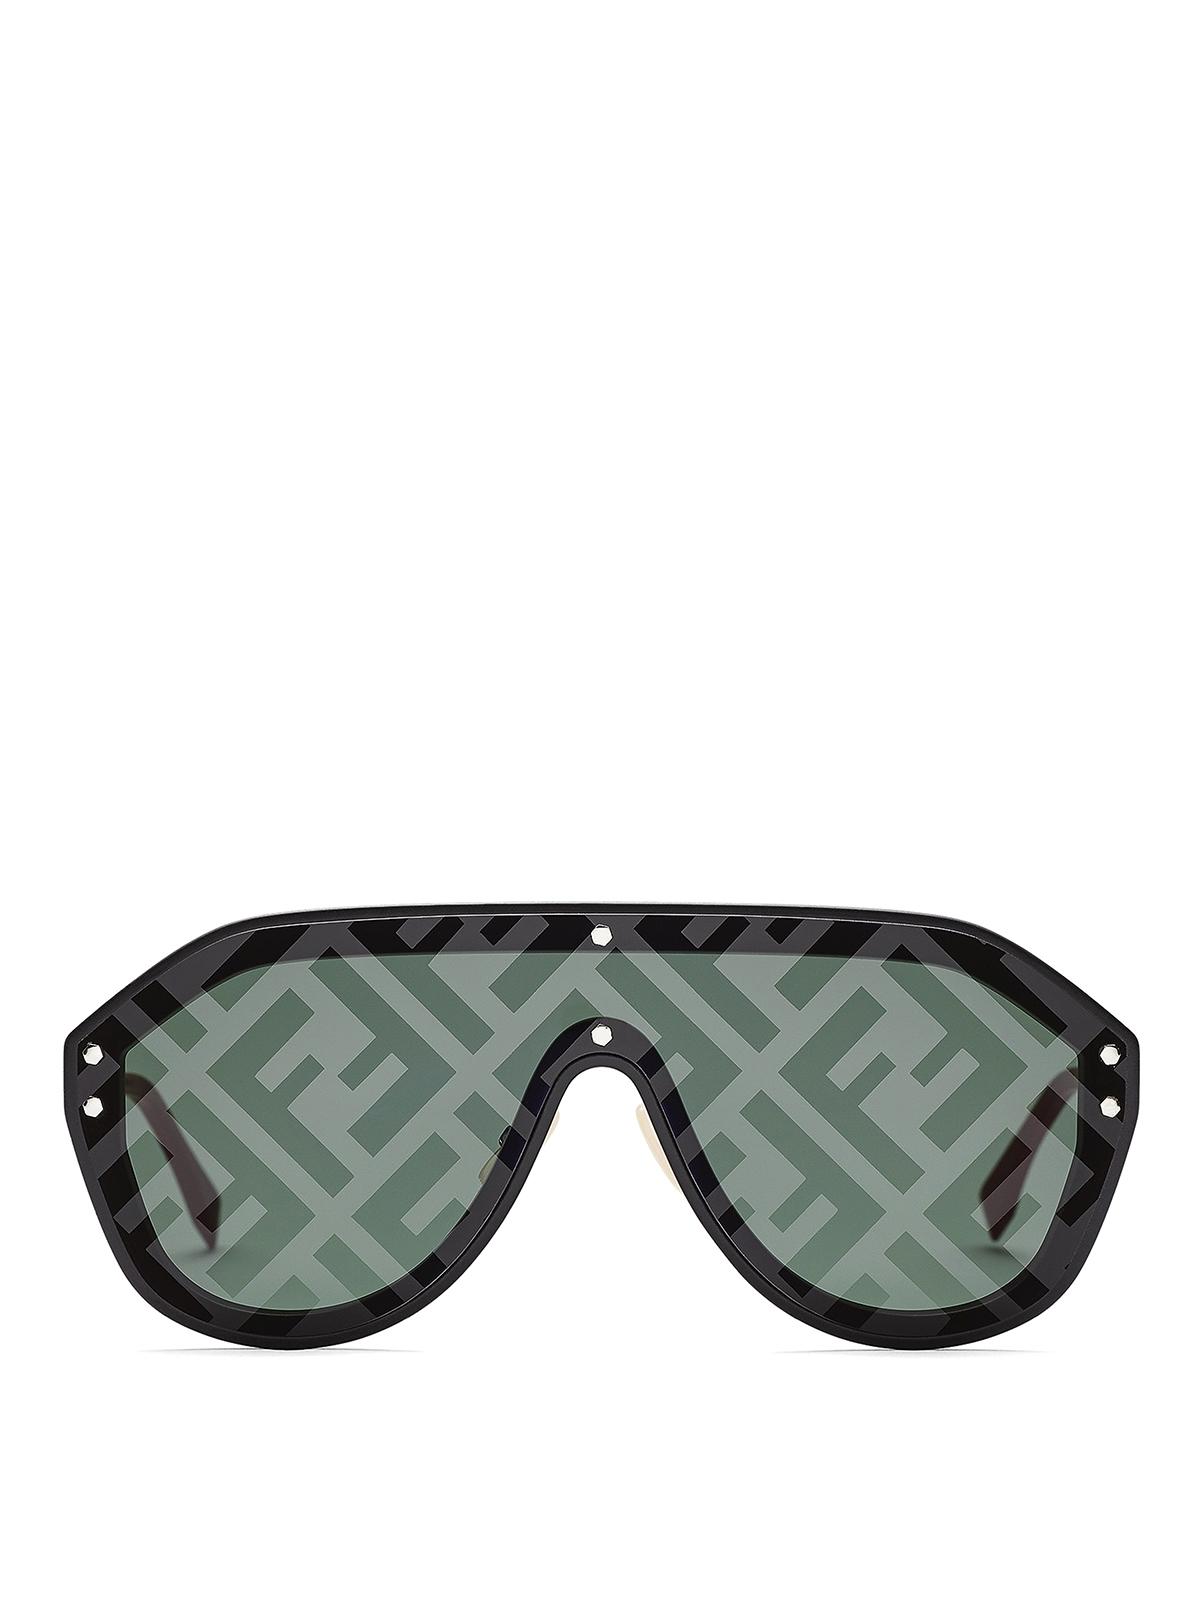 Fendi Ff Print Aviator Sunglasses in Black for Men - Lyst